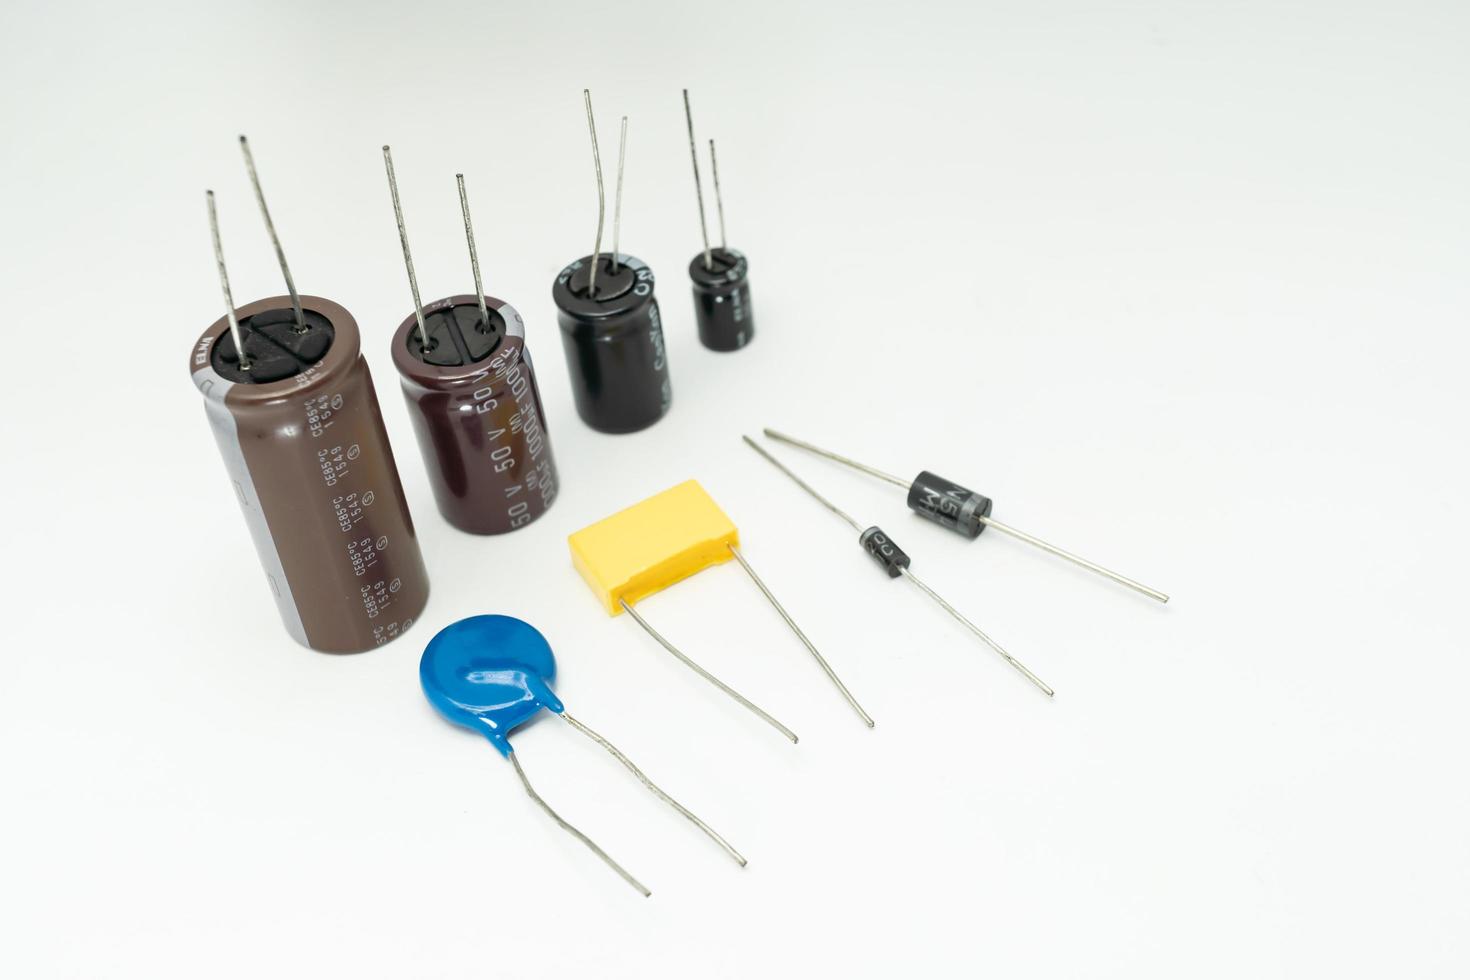 grupp av olika elektroniska komponenter diod kondensatorer resistorer lysdioder. isolerad på vit bakgrund foto